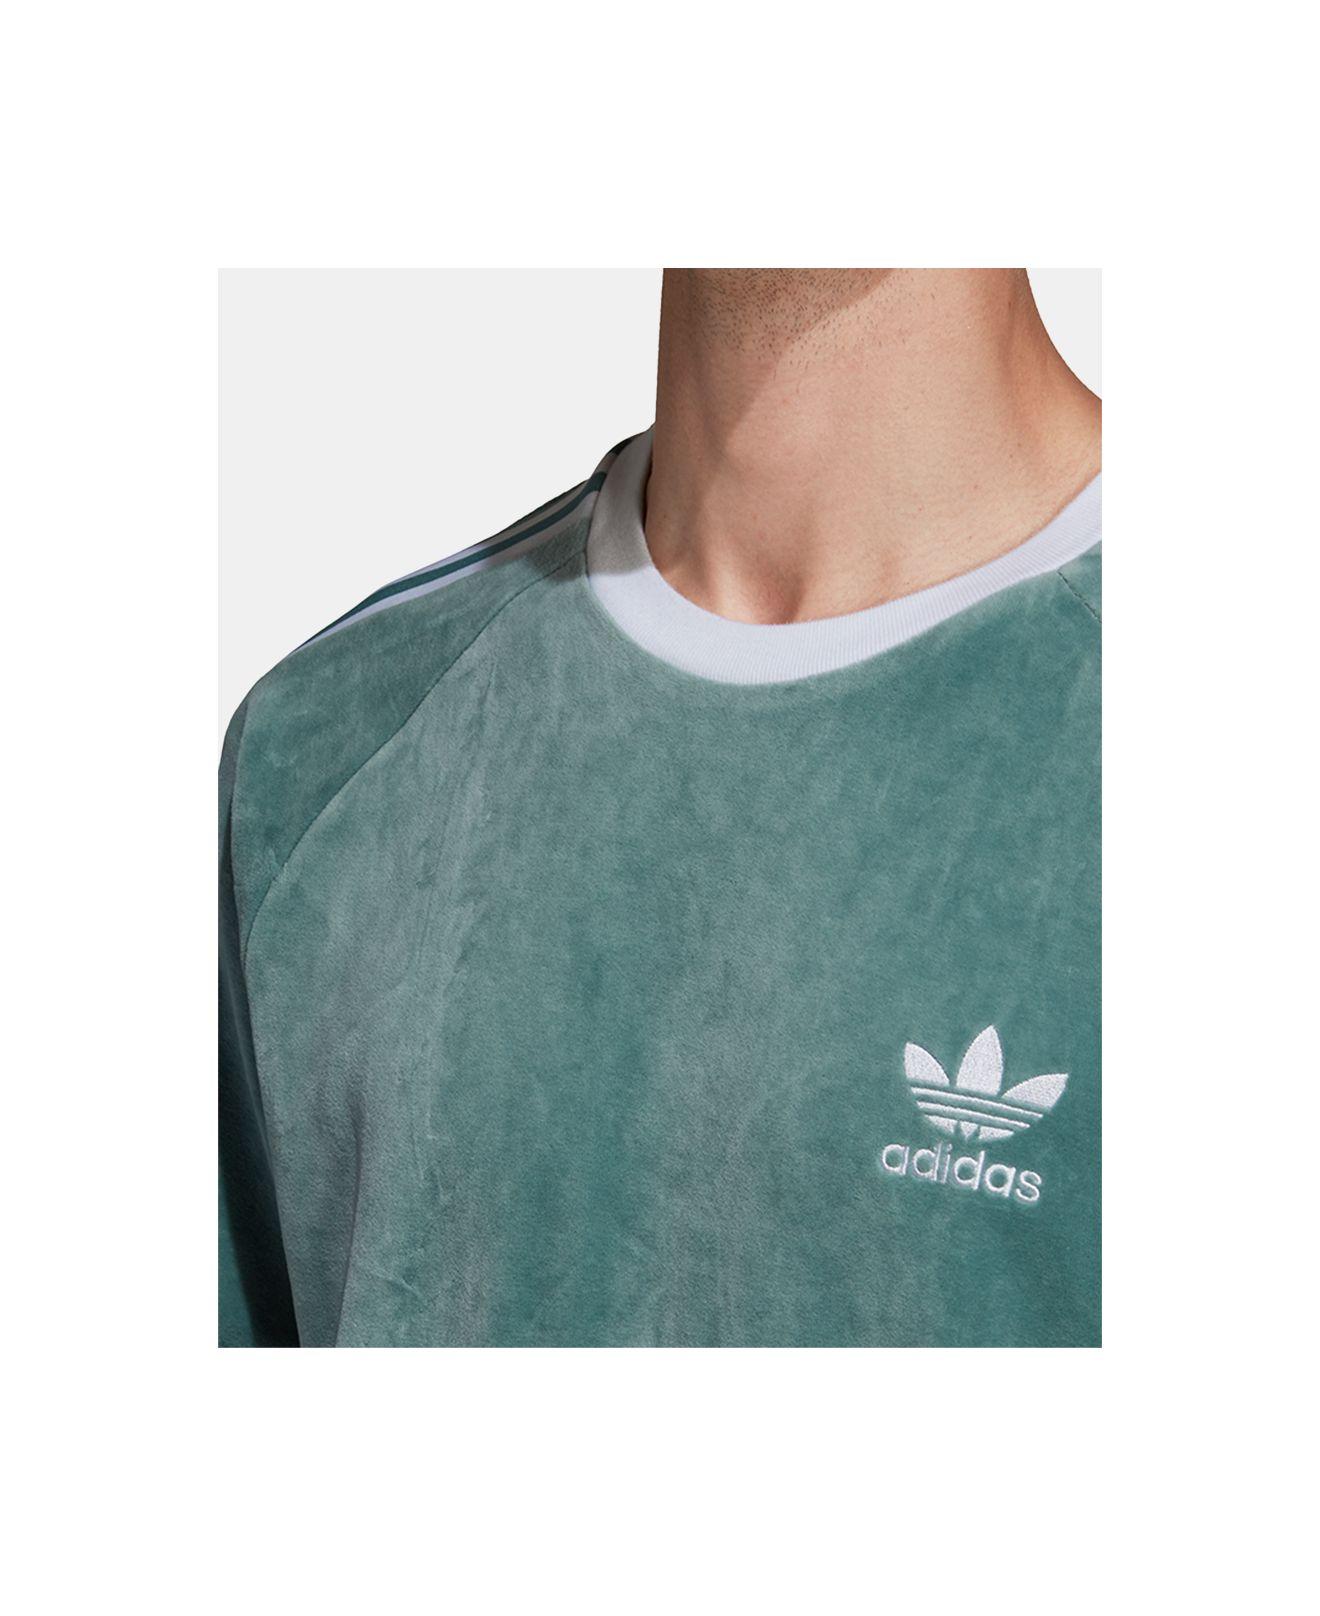 adidas Cotton Adicolor Velour T-shirt in Green for Men - Lyst